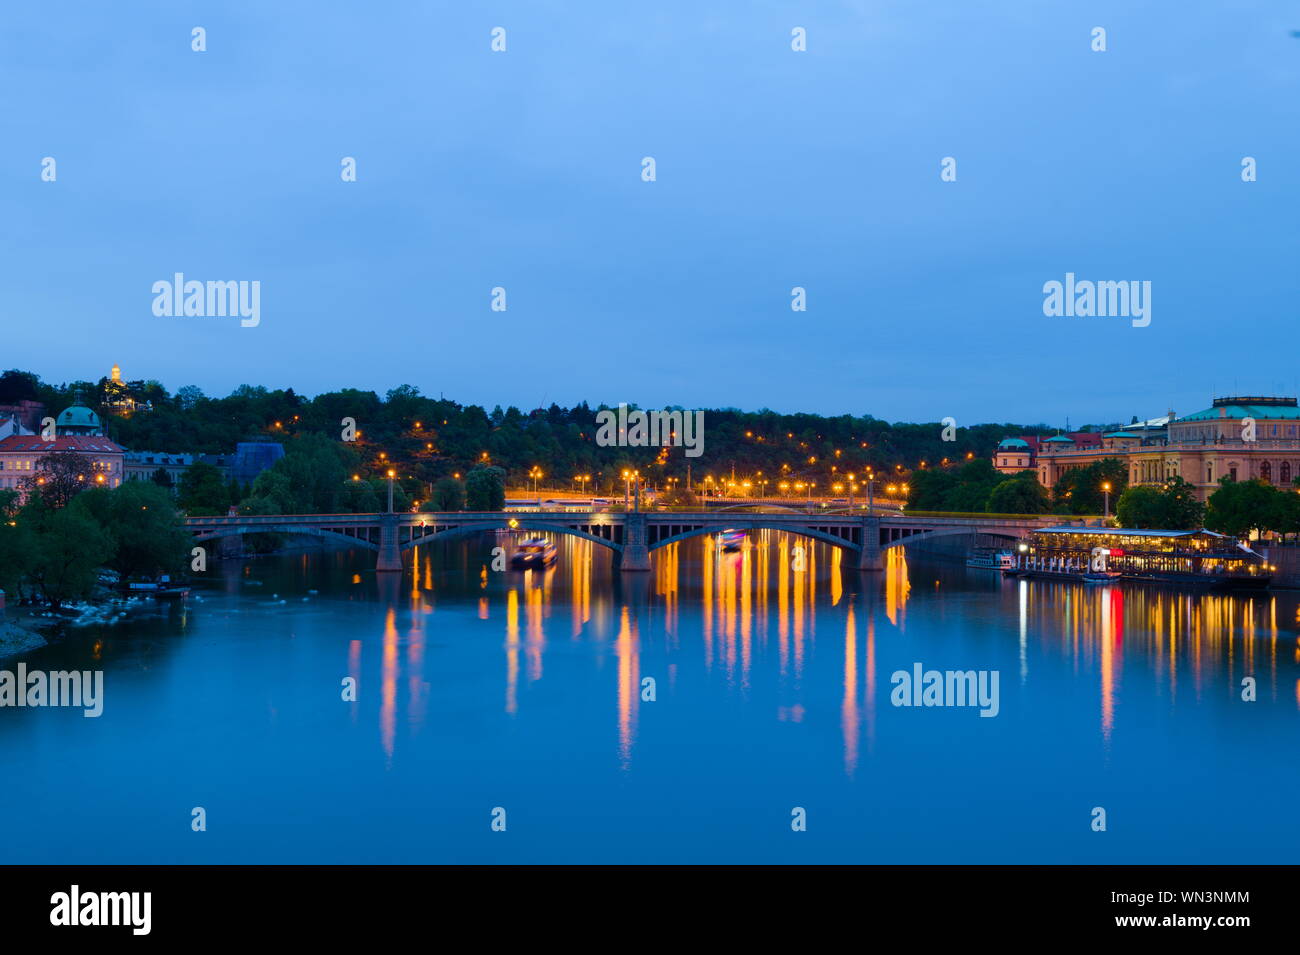 The Vltava River at night, seen from the Charles Bridge, Prague, Czech Republic Stock Photo